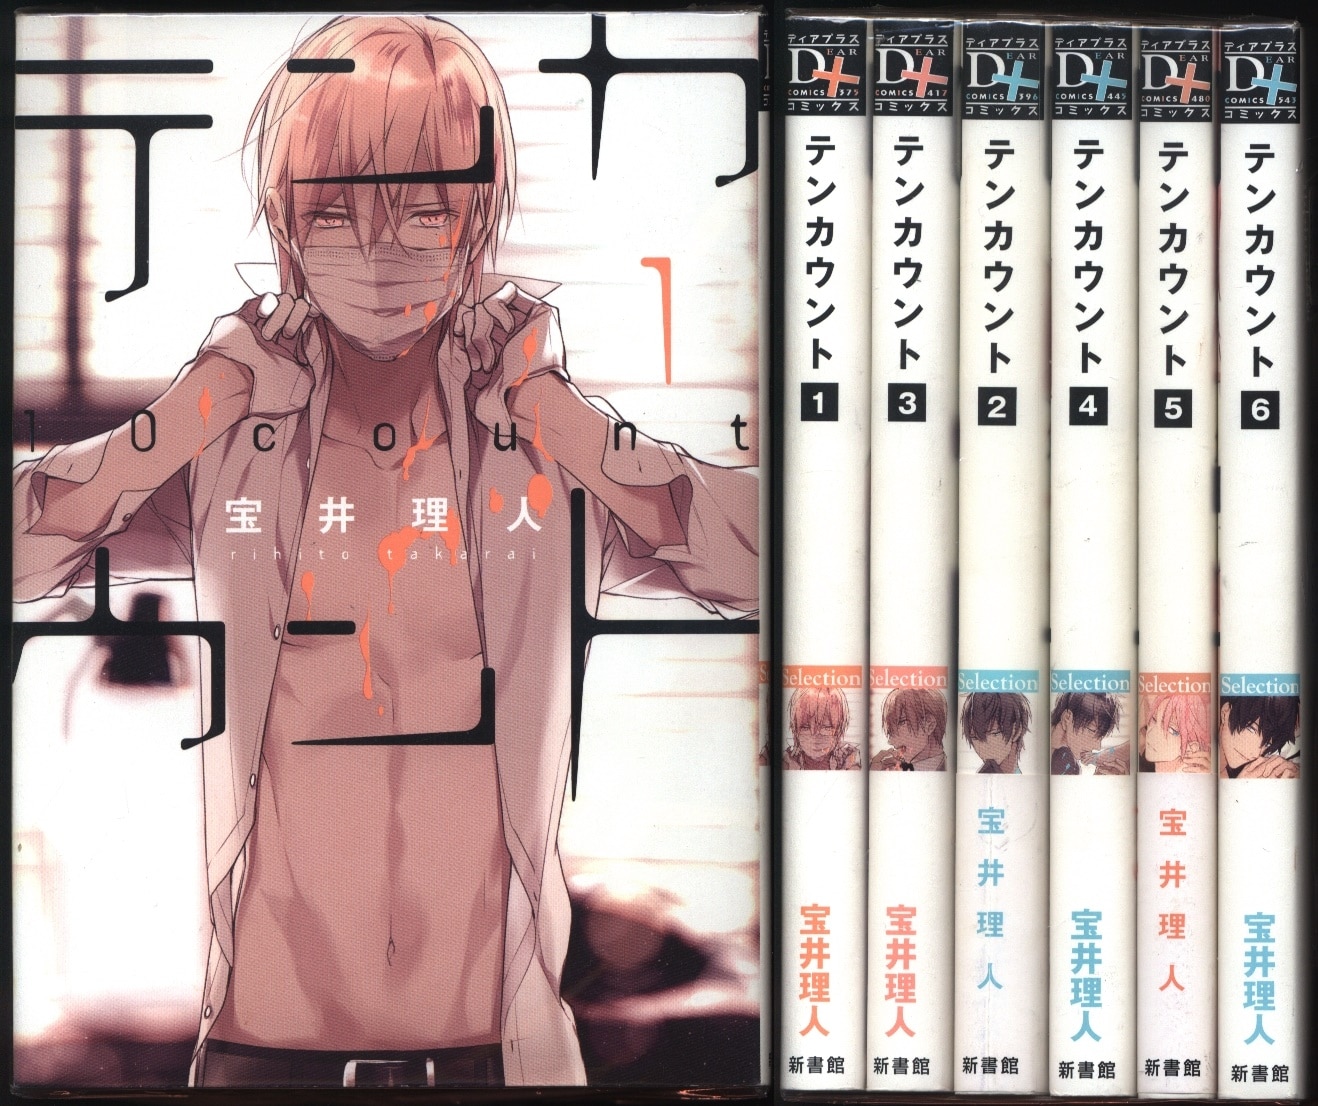 Shinshokan Dear Plus Comic Rihito Takarai 10 Ten Count Complete 6 Volume  Set | Mandarake Online Shop